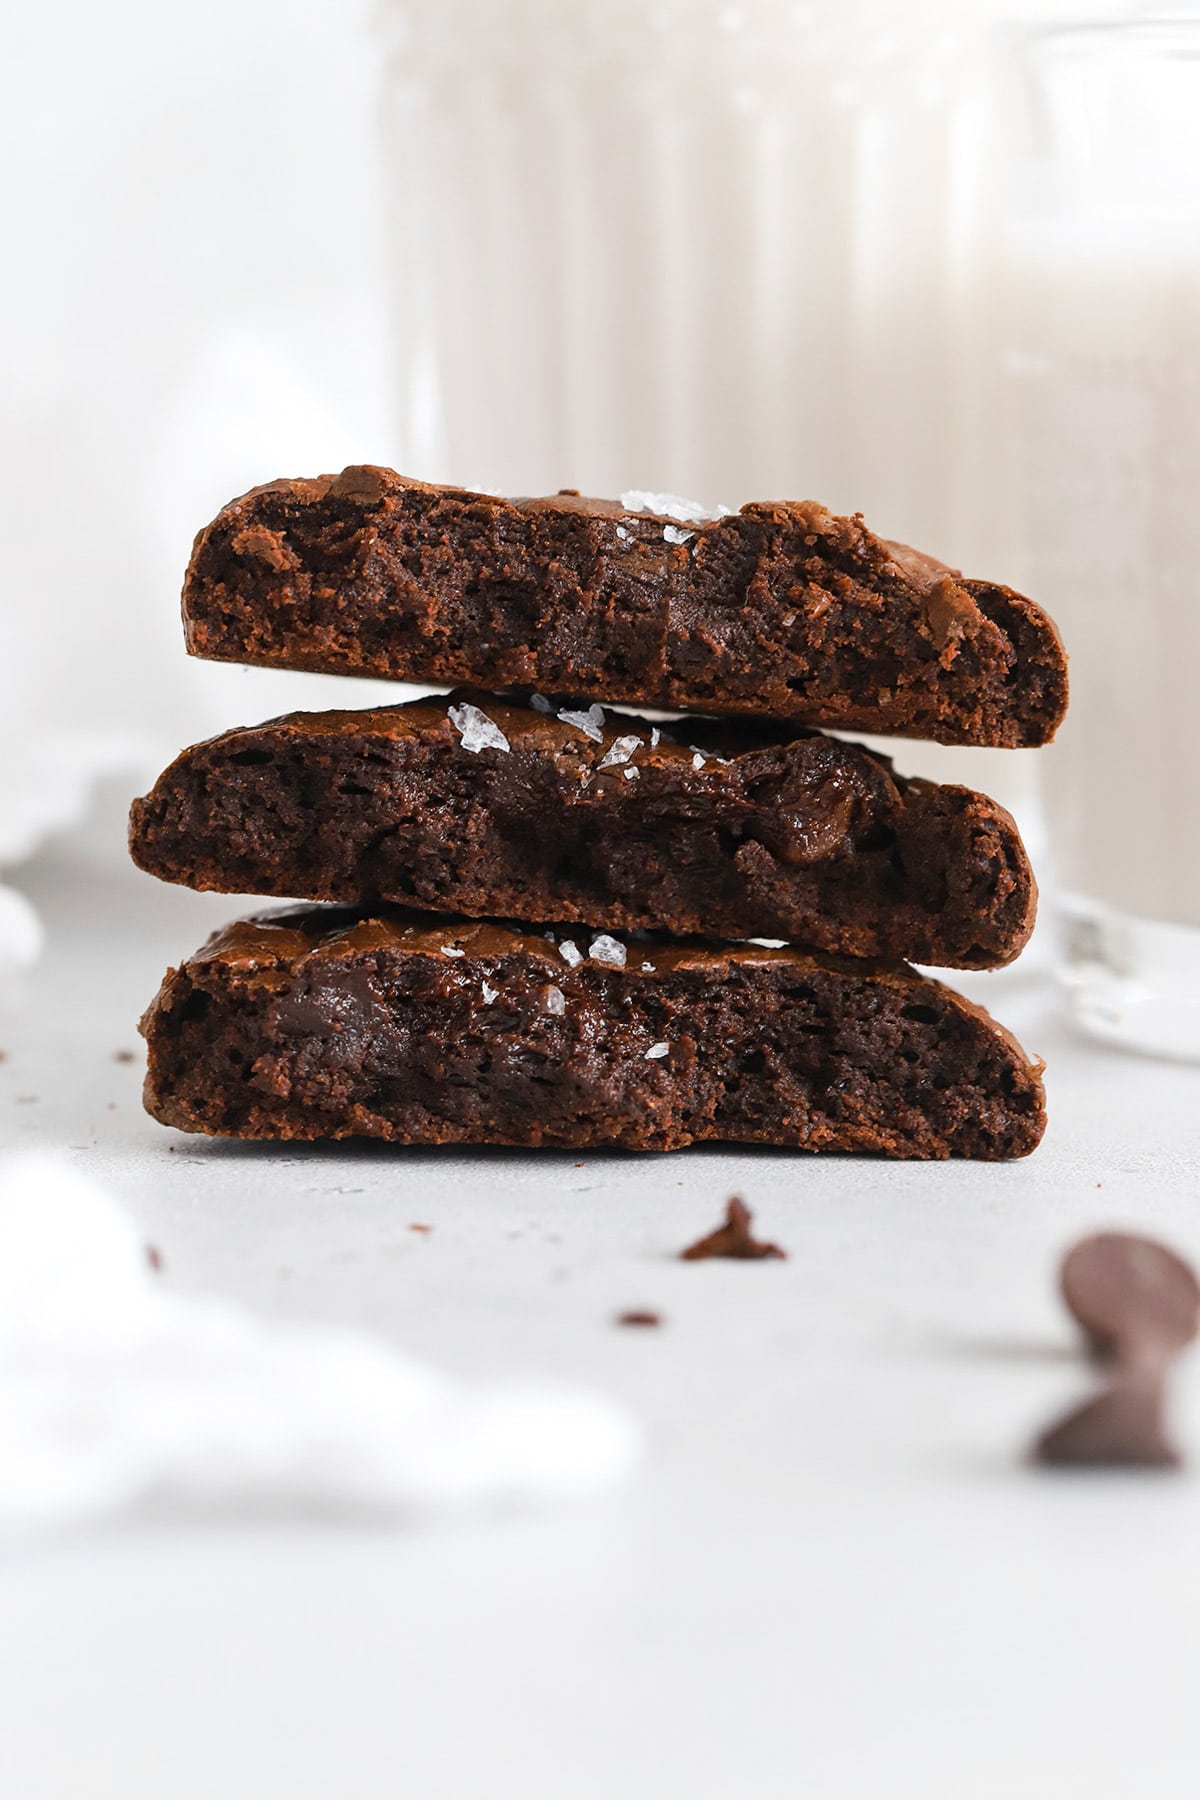 gluten-free chocolate brownie cookies broken in half, revealing their fudgy center